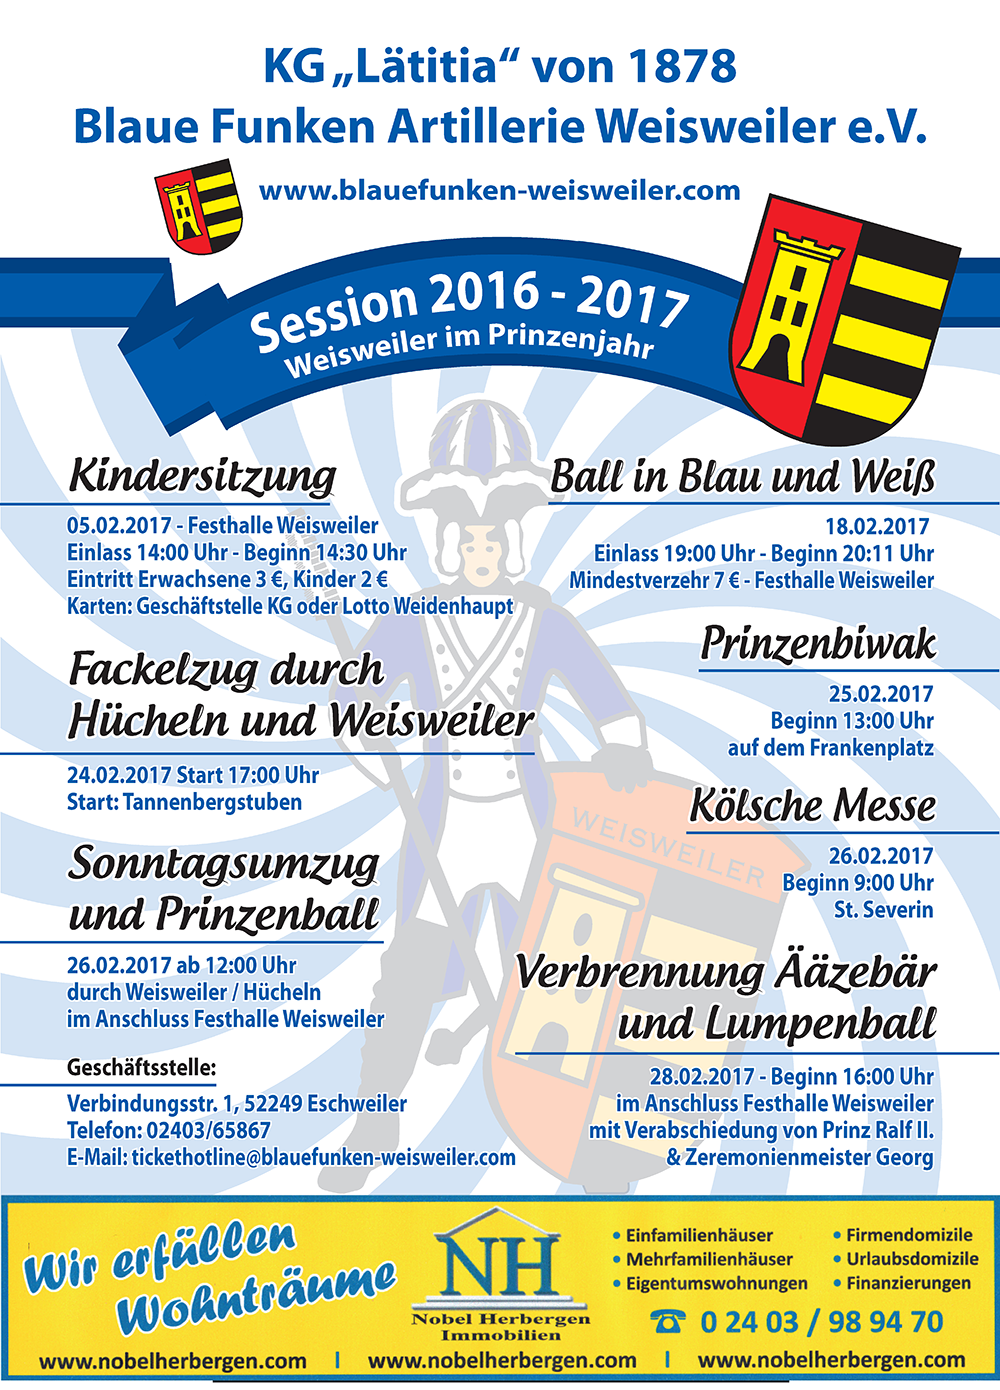 Session 2016/2017